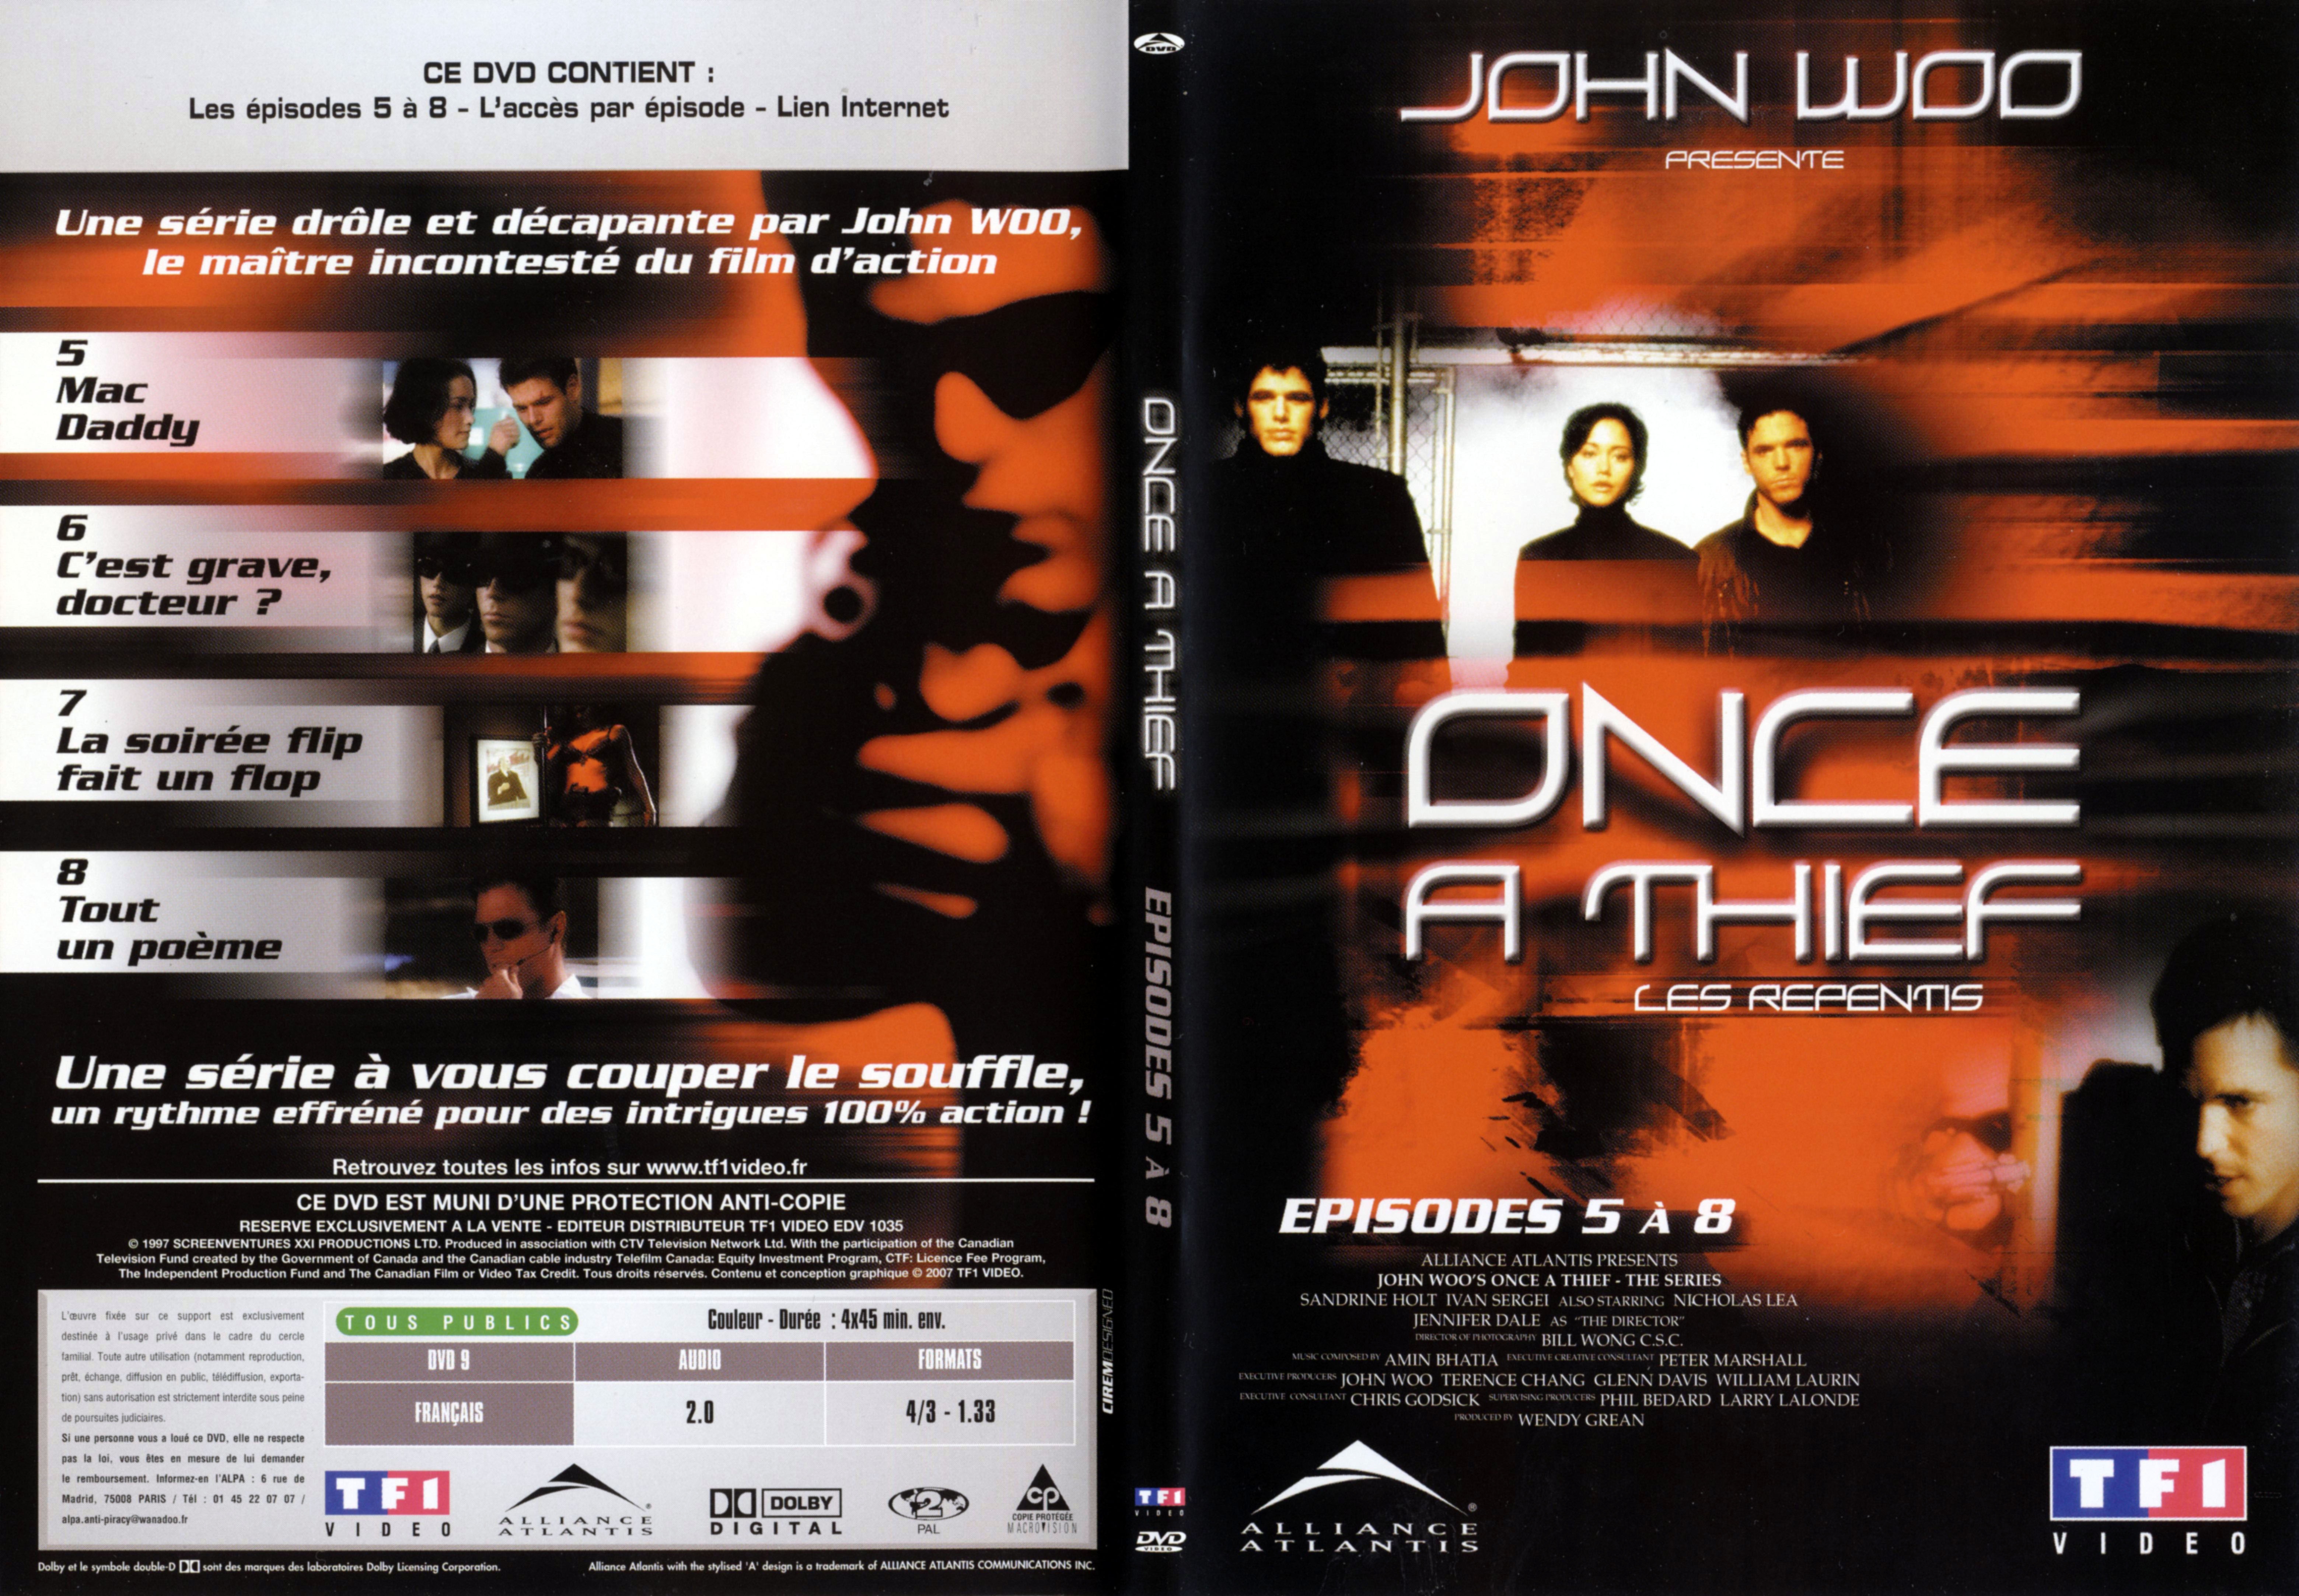 Jaquette DVD Once a thief - Les repentis DVD 2